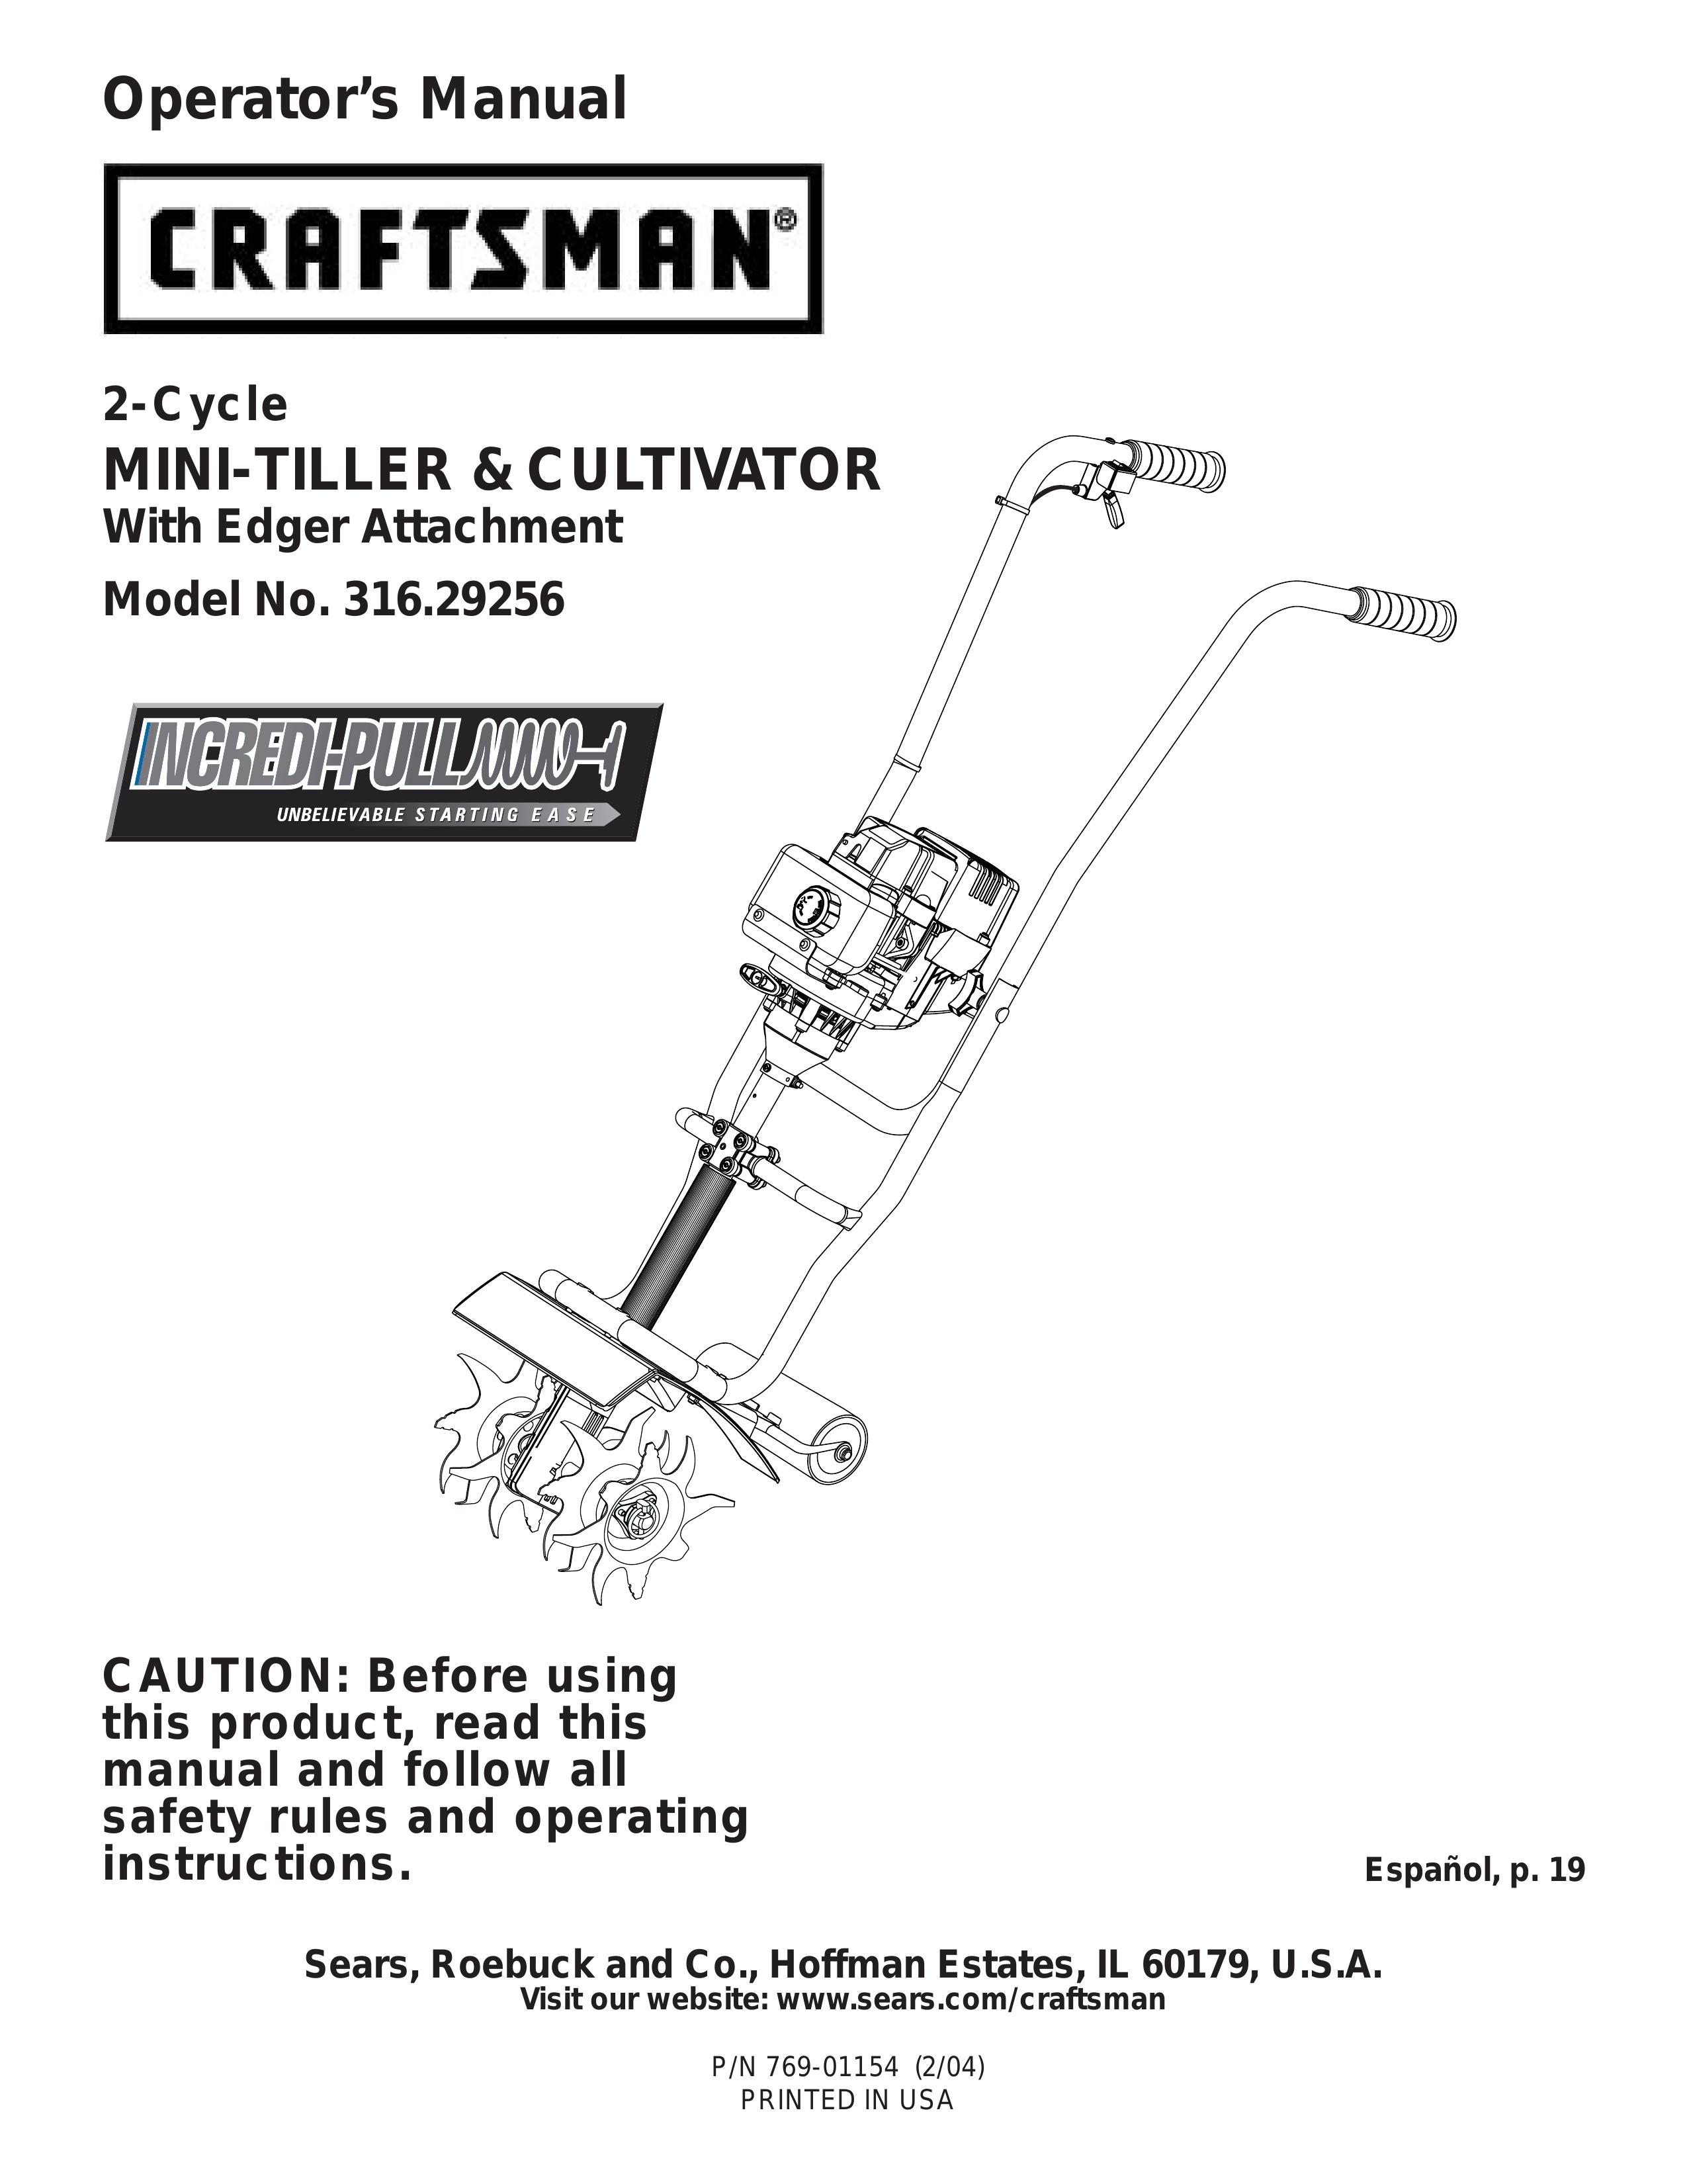 Craftsman 316.29256 Cultivator User Manual